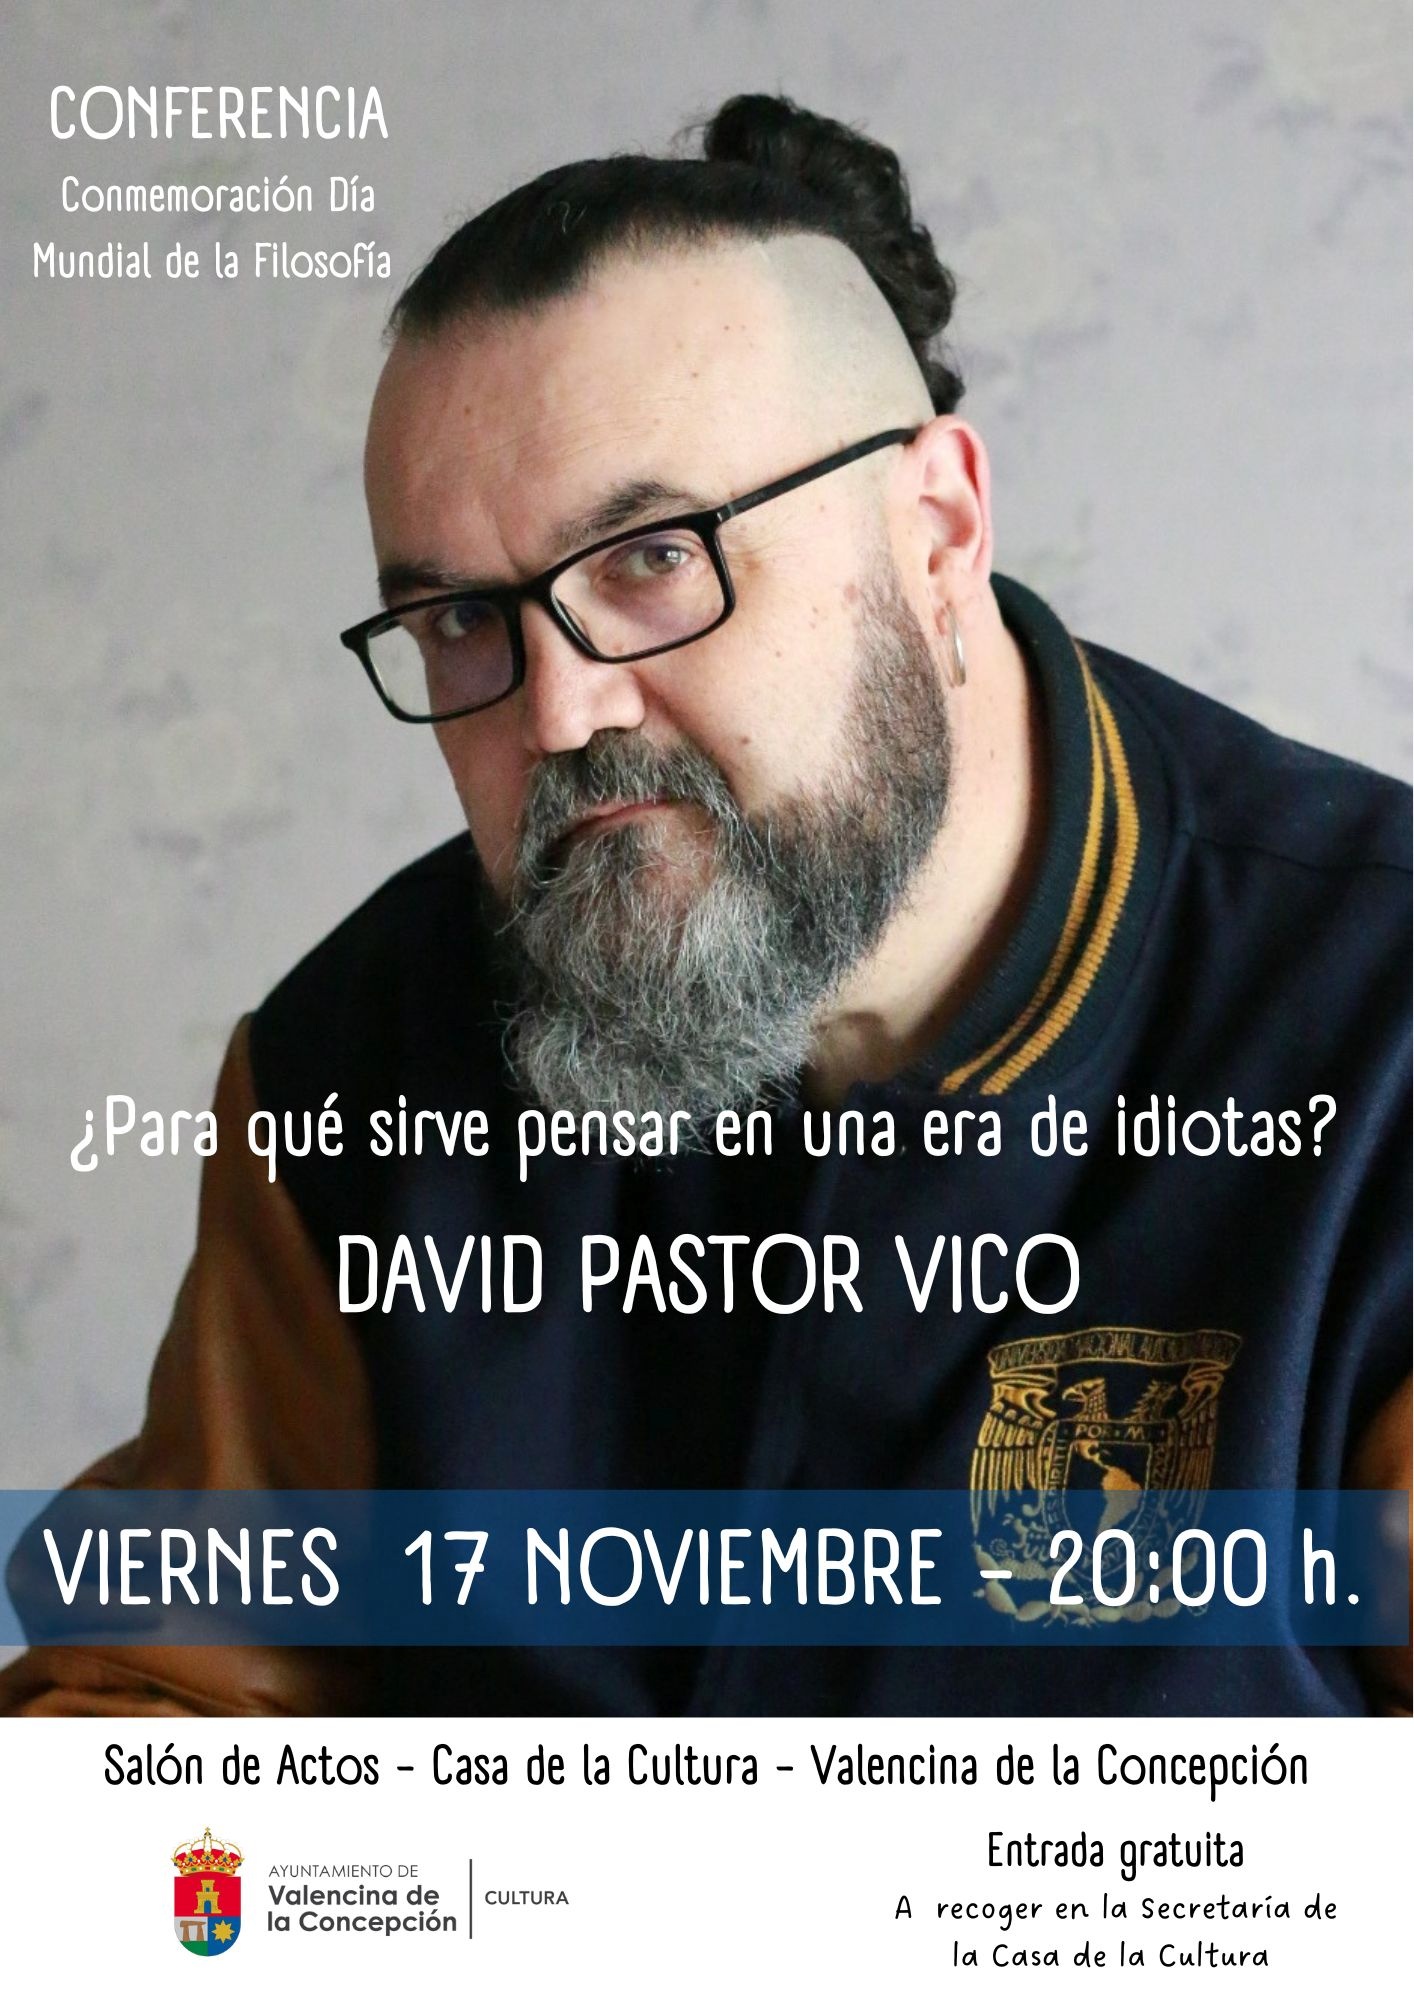 David Pastor Vico